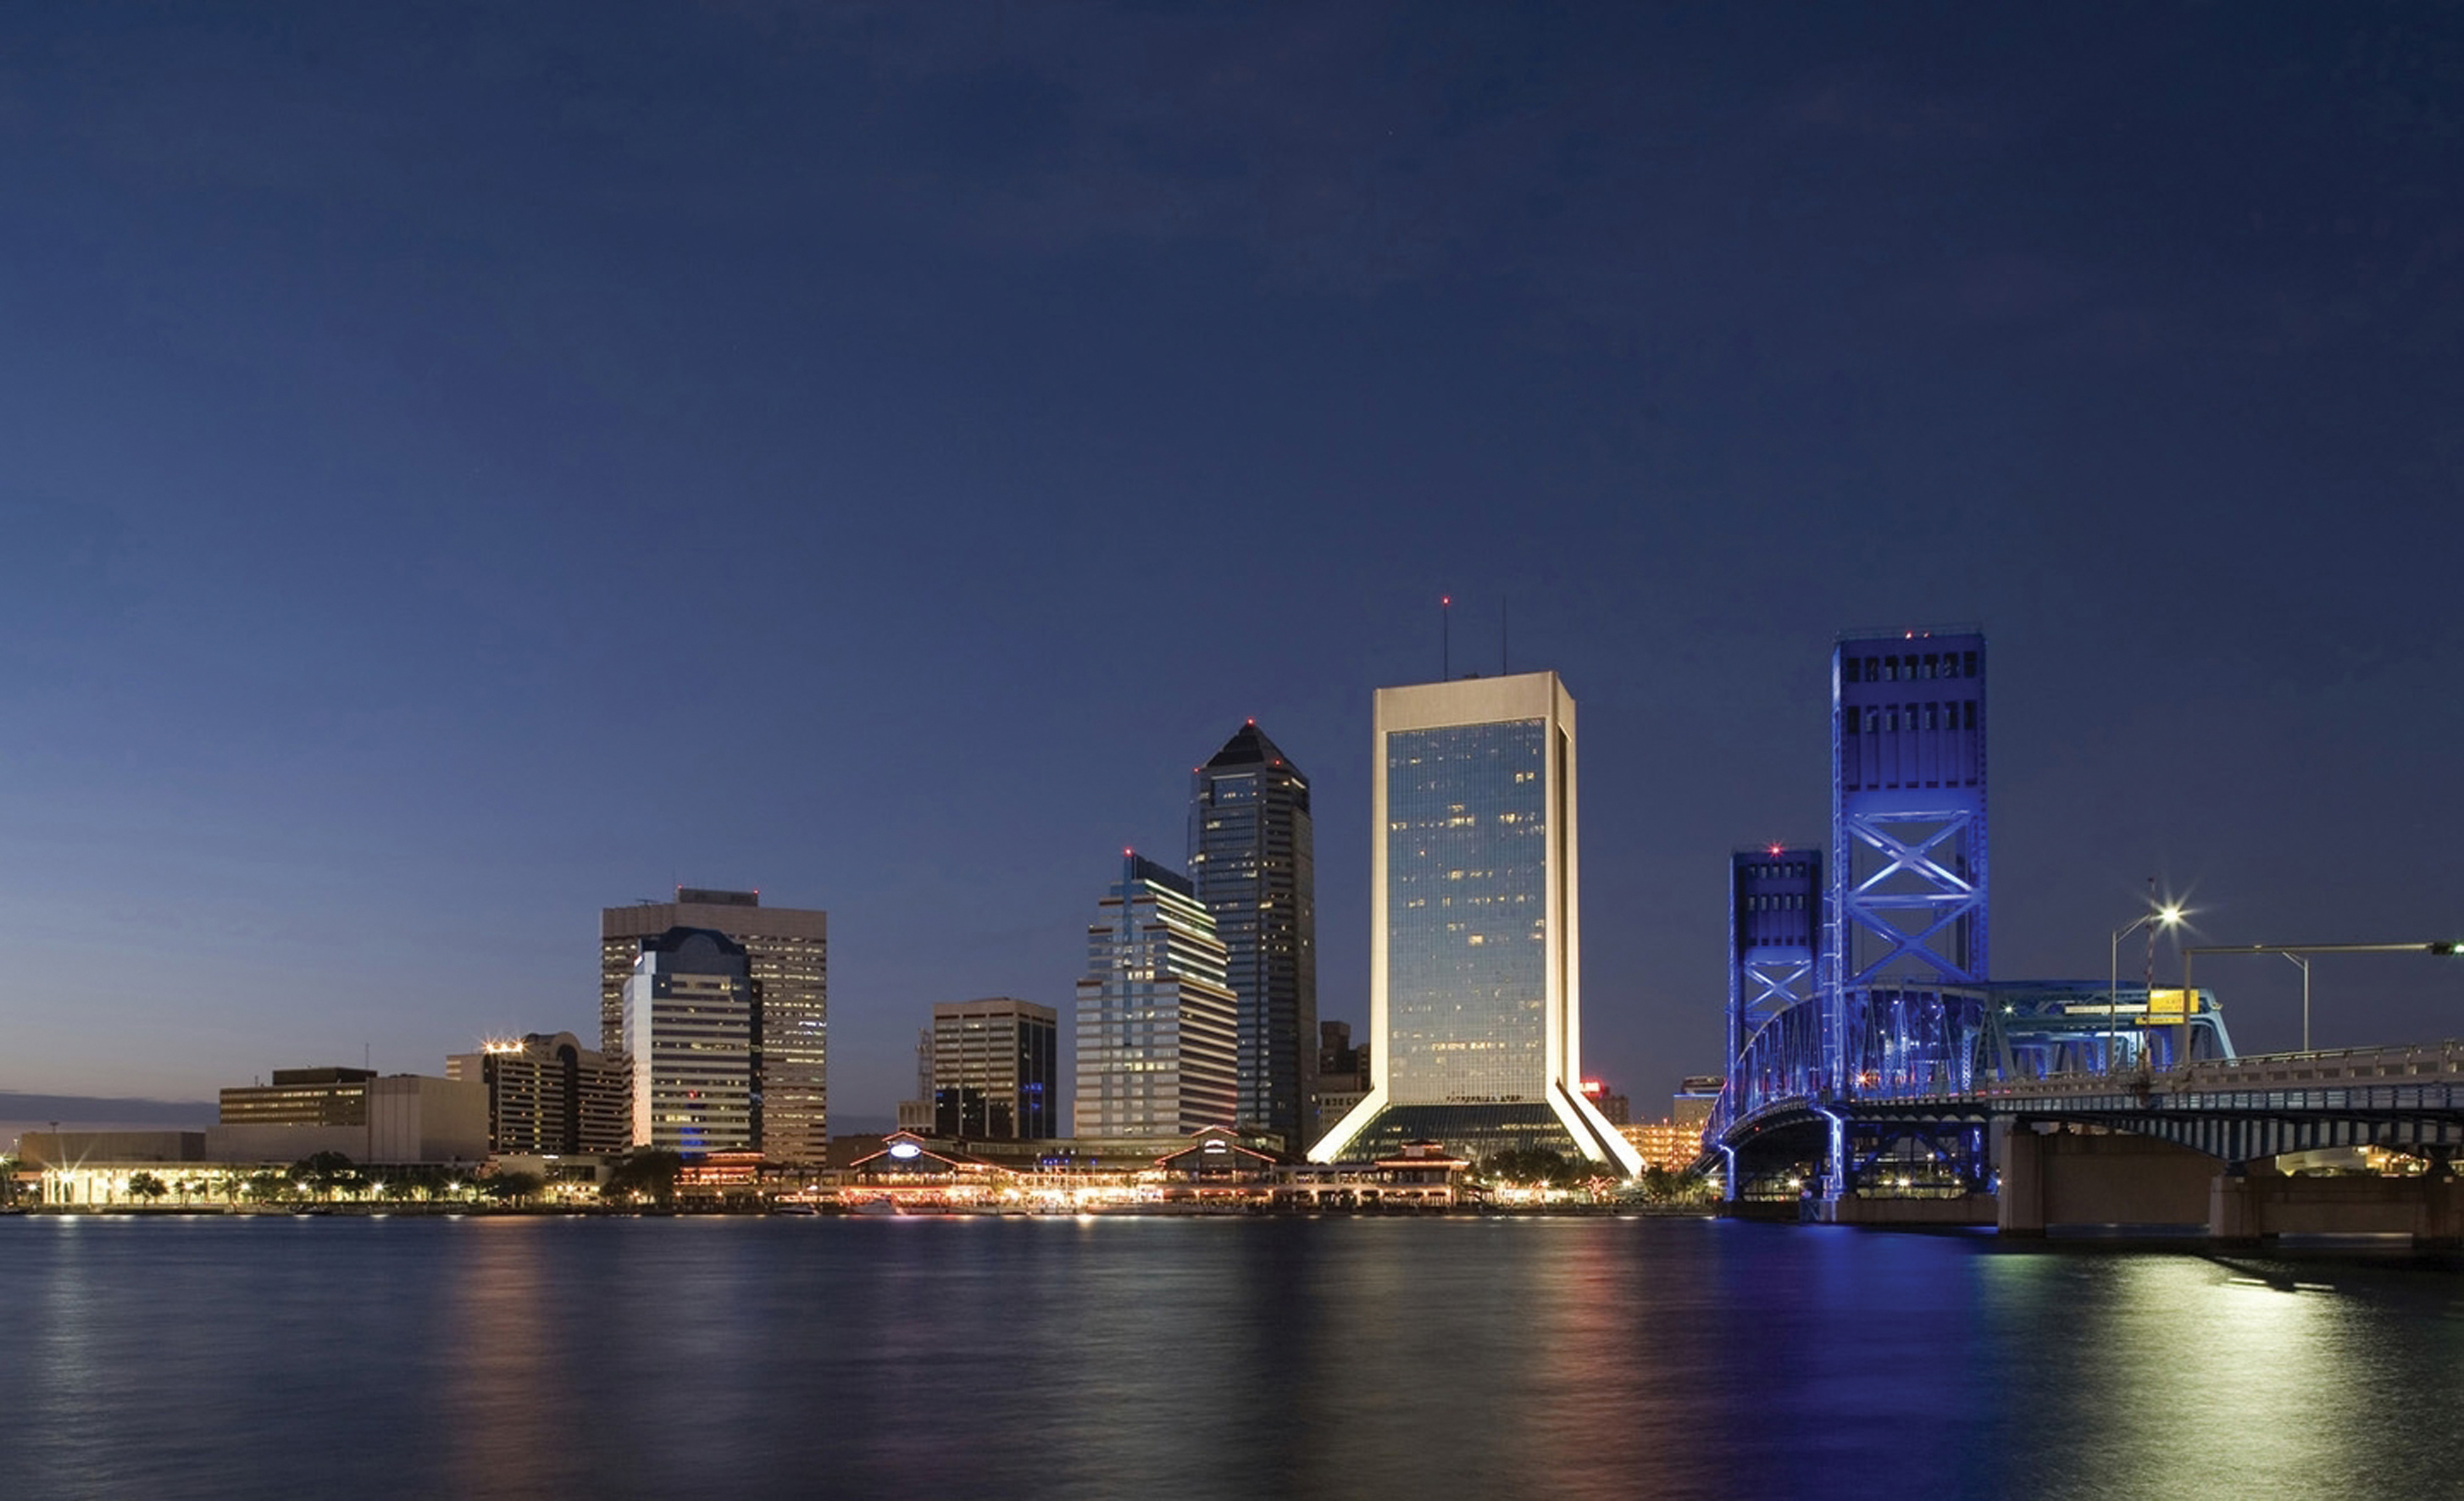 The Jacksonville skyline